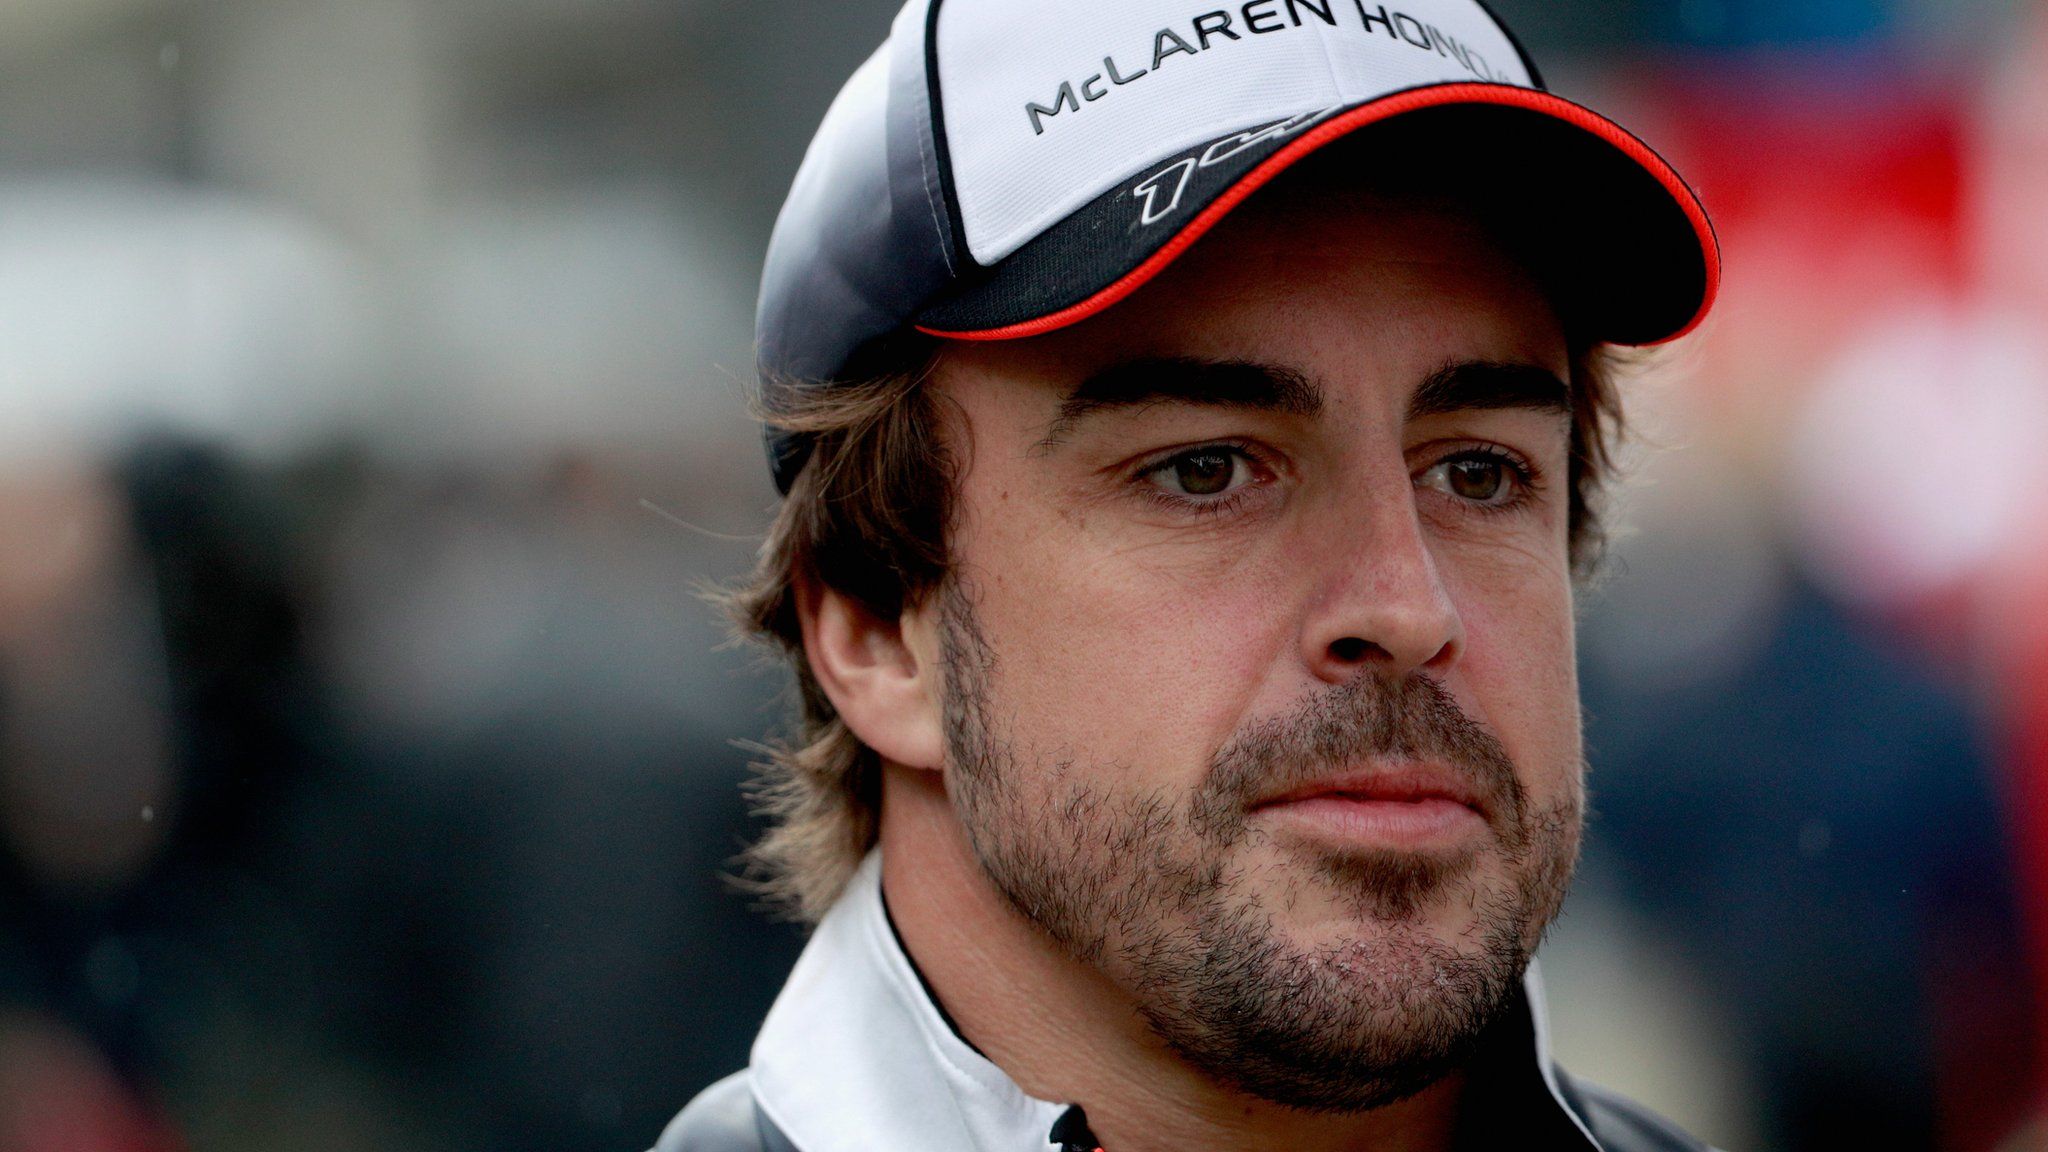 McLaren-Honda F1 driver Fernando Alonso